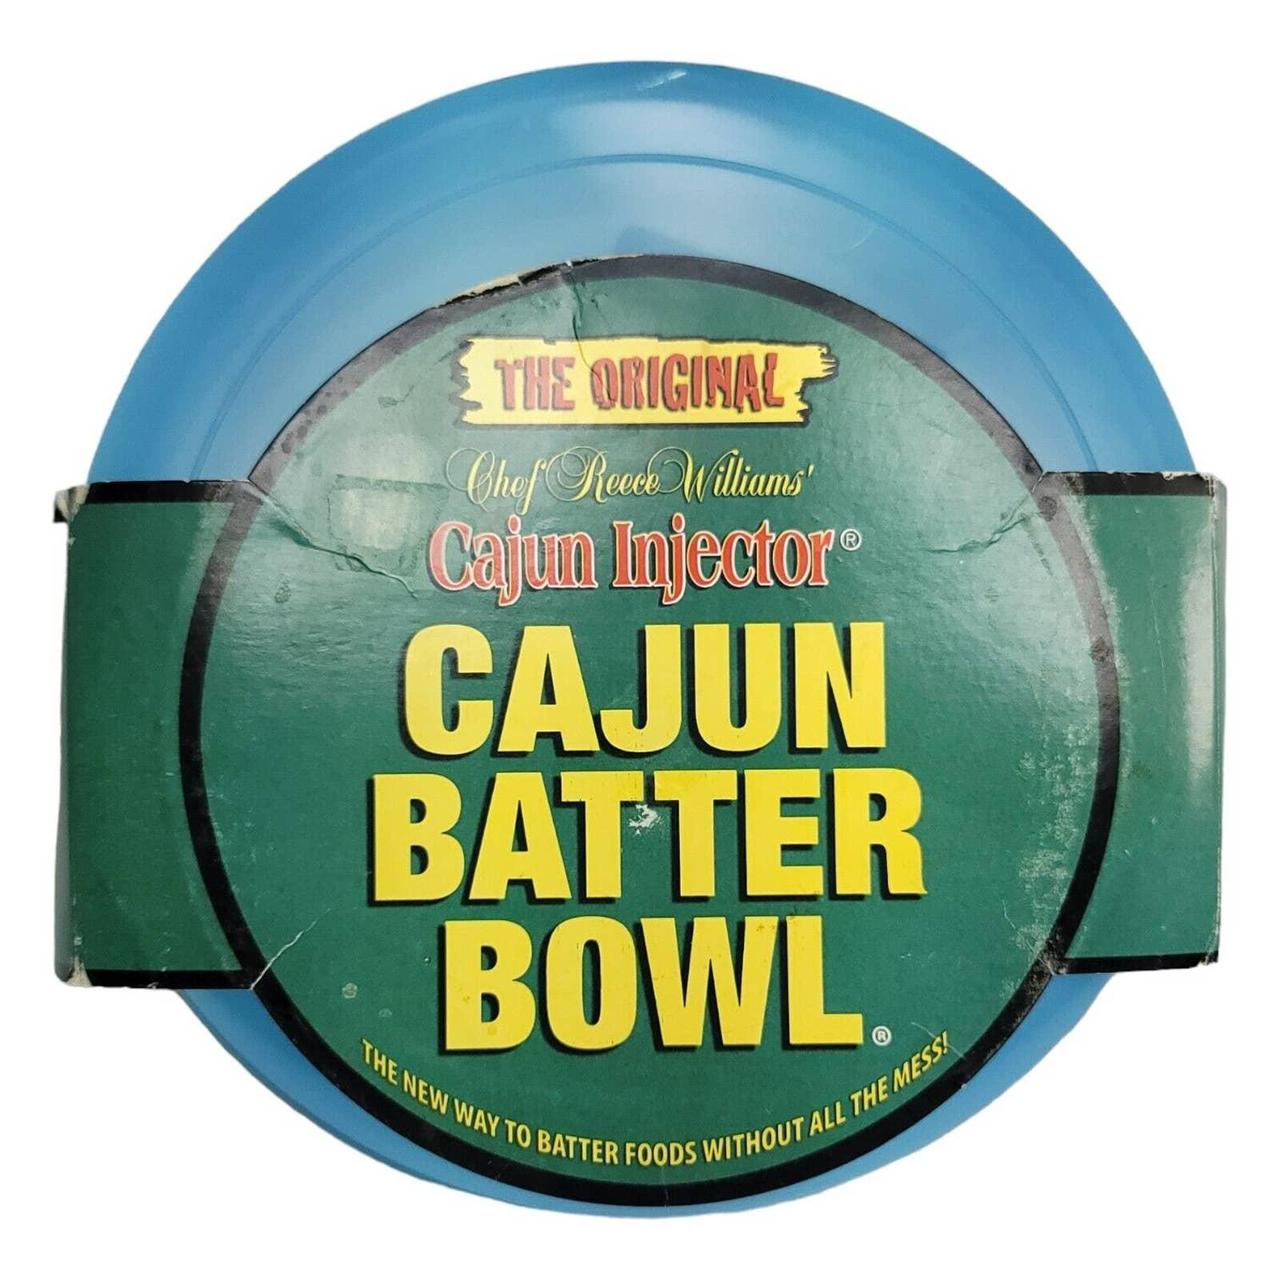 Cajun Injector Batter Bowl 